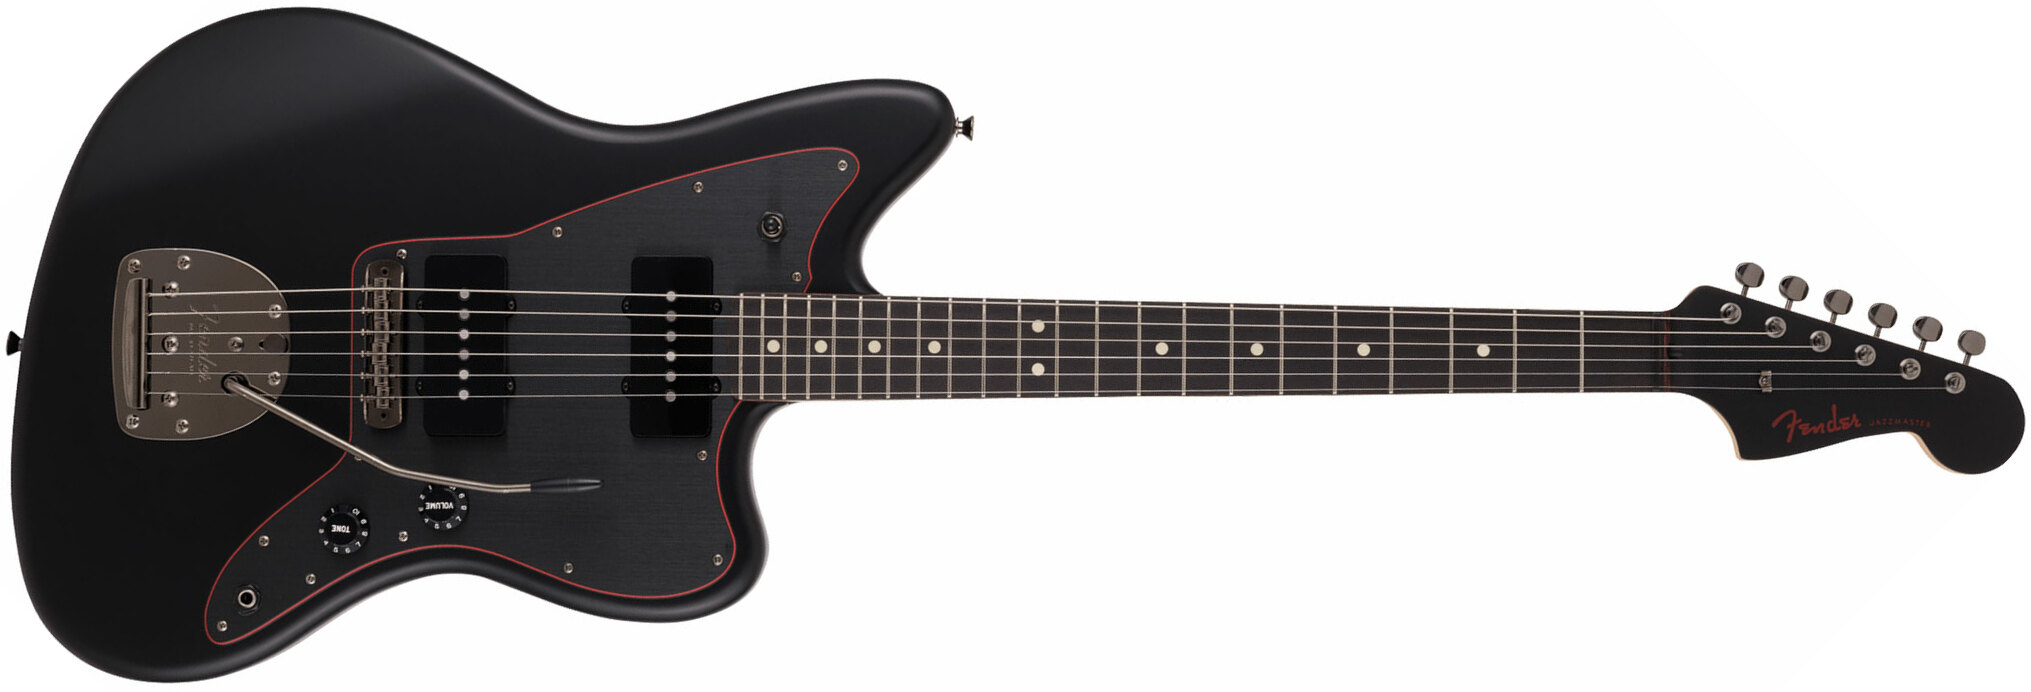 Fender Jazzmaster Hybrid Ii Jap 2s Trem Rw - Satin Black - Retro rock electric guitar - Main picture